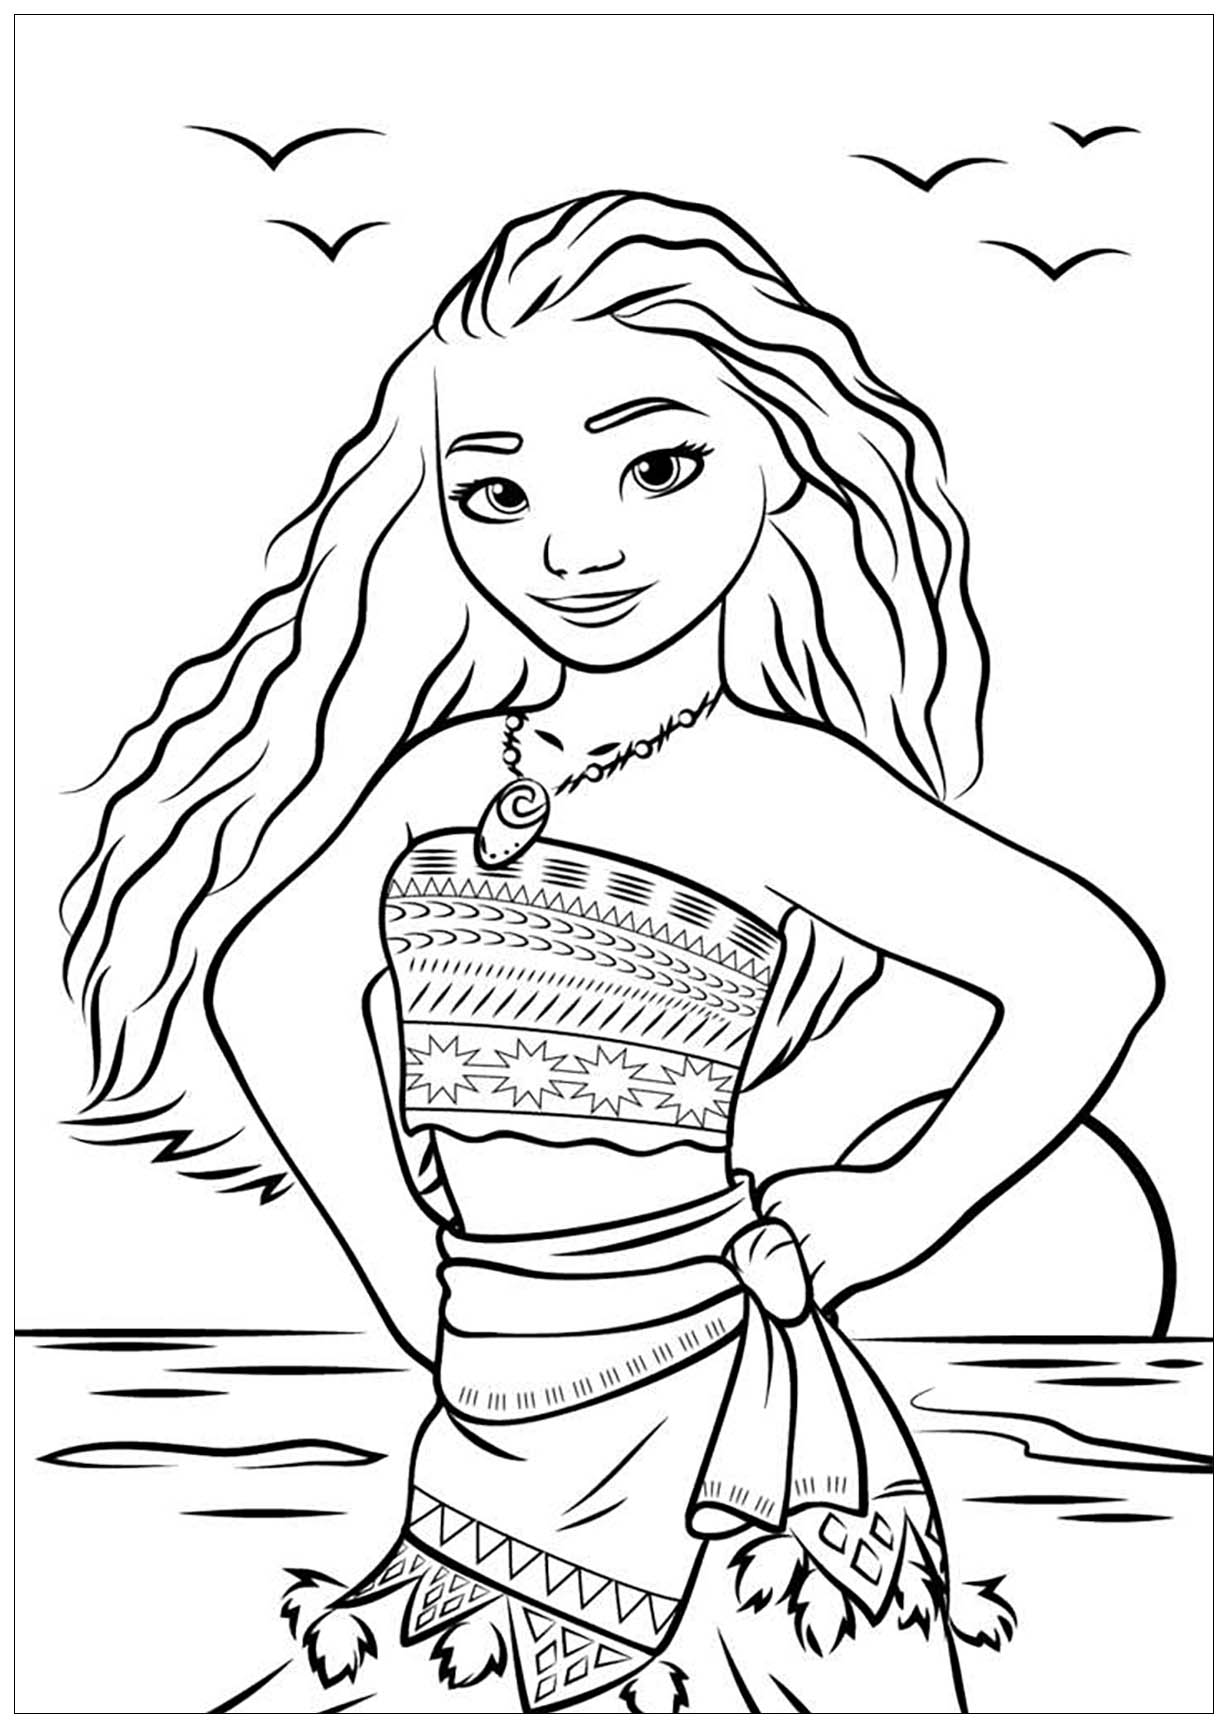 Download Coloring Pages Disney Princess Moana - coloringpages2019